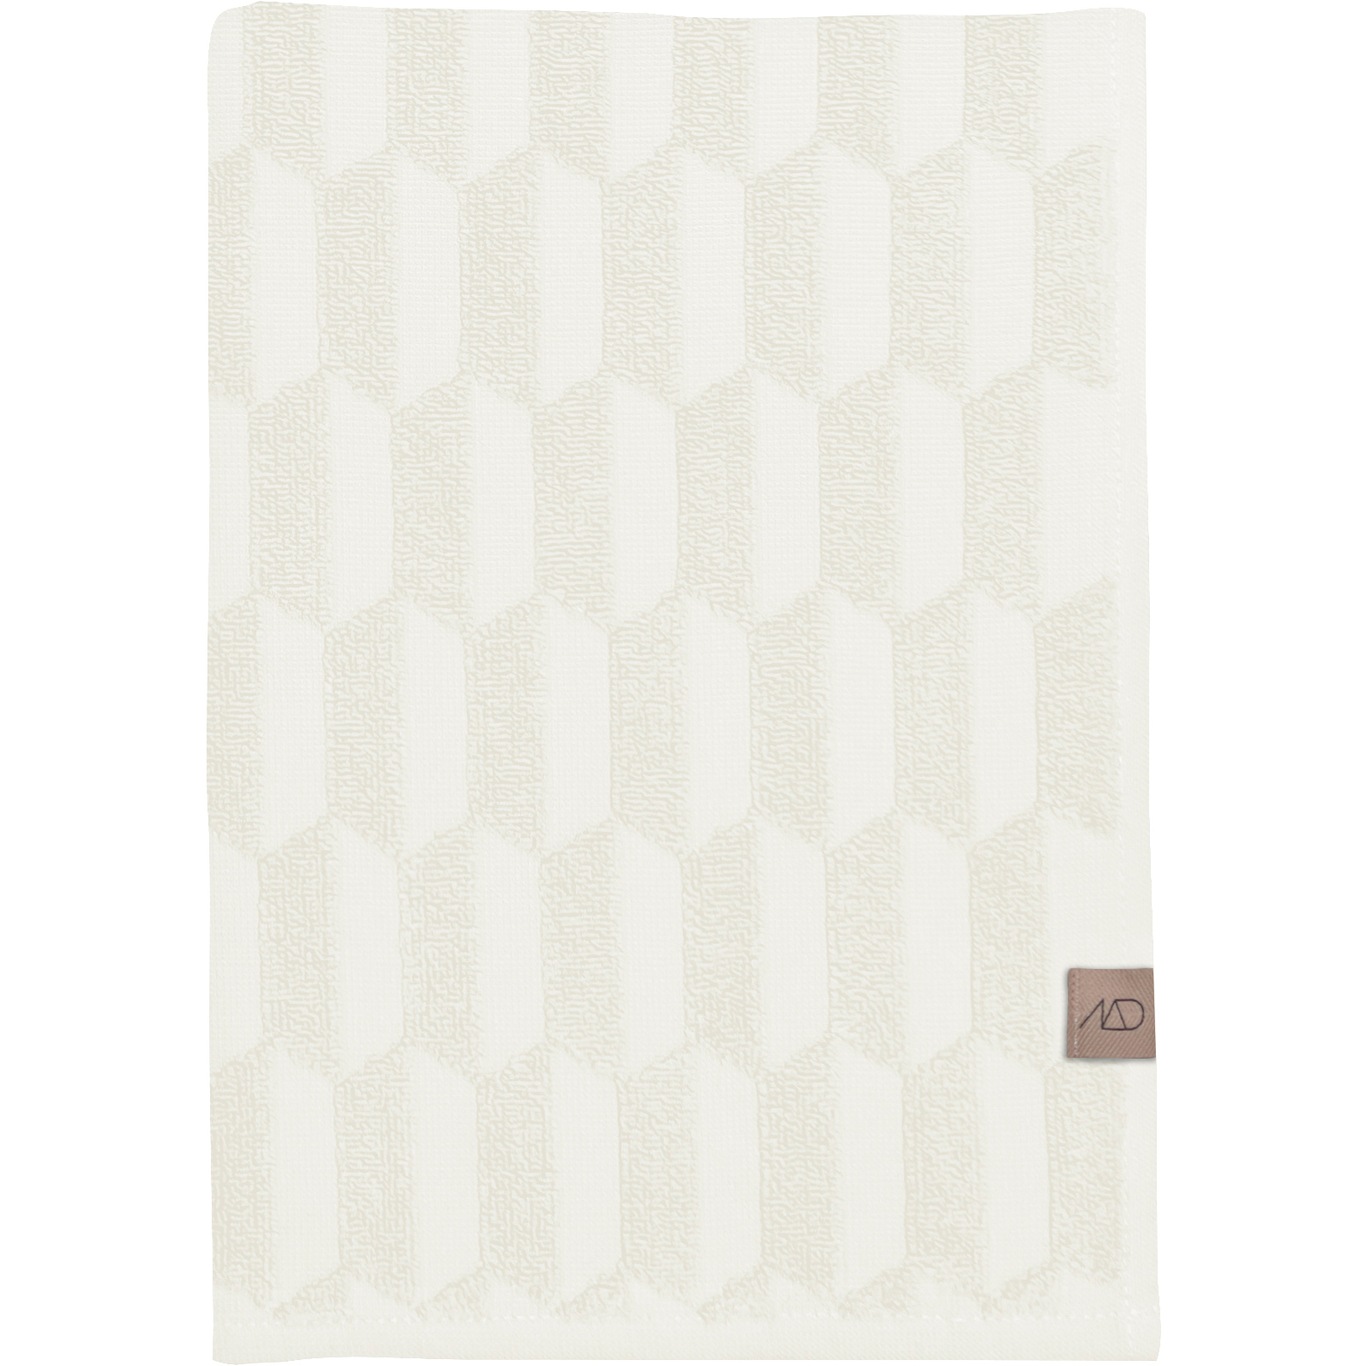 Geo Towel Off-white 2-pack, 35x55 cm